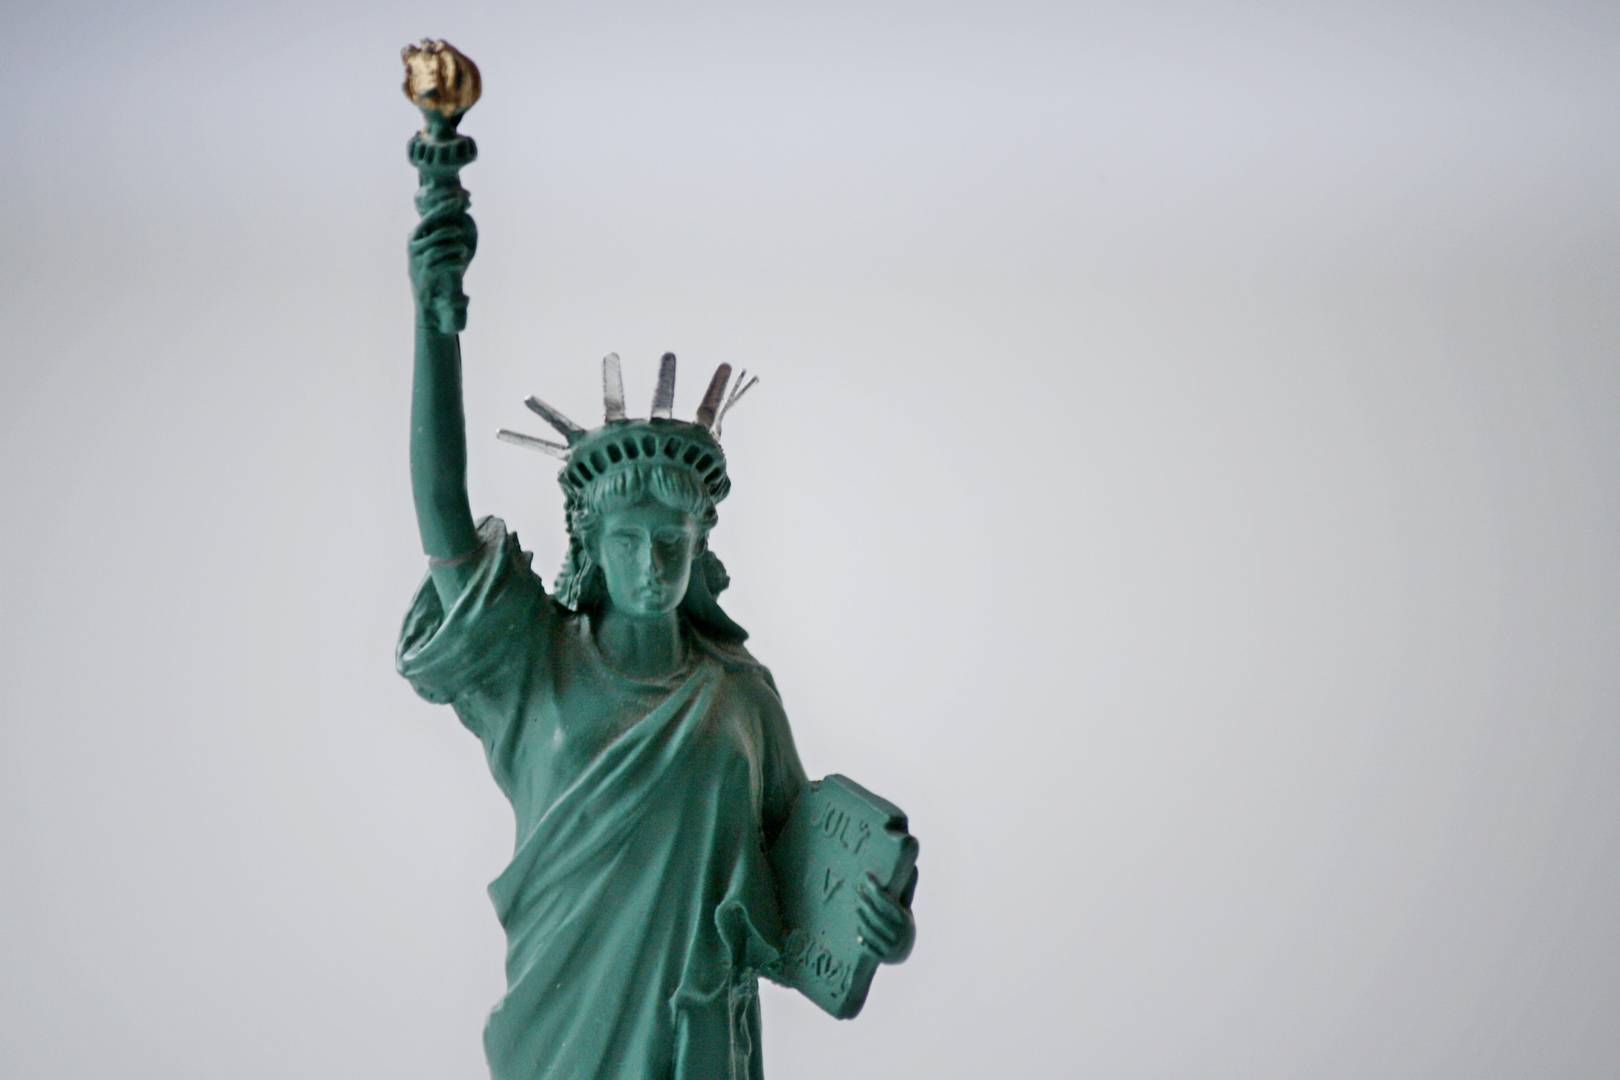 Фигурка Статуи Свободы